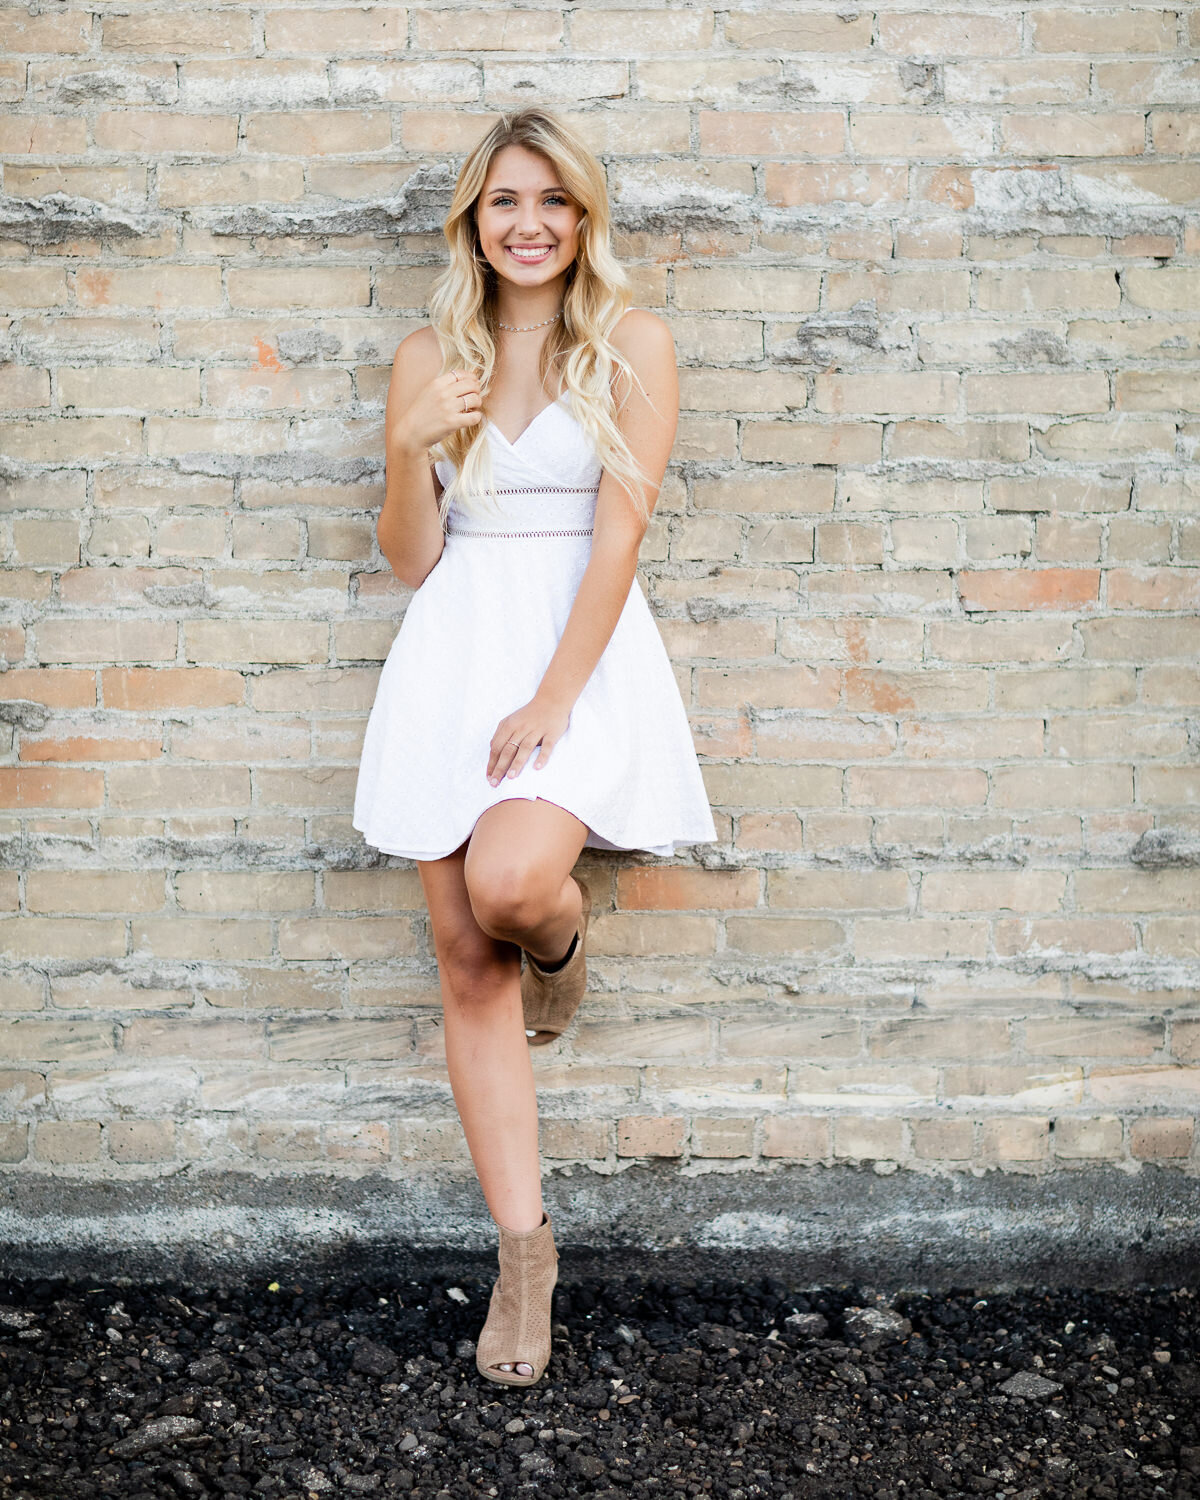 White dress against brick wall